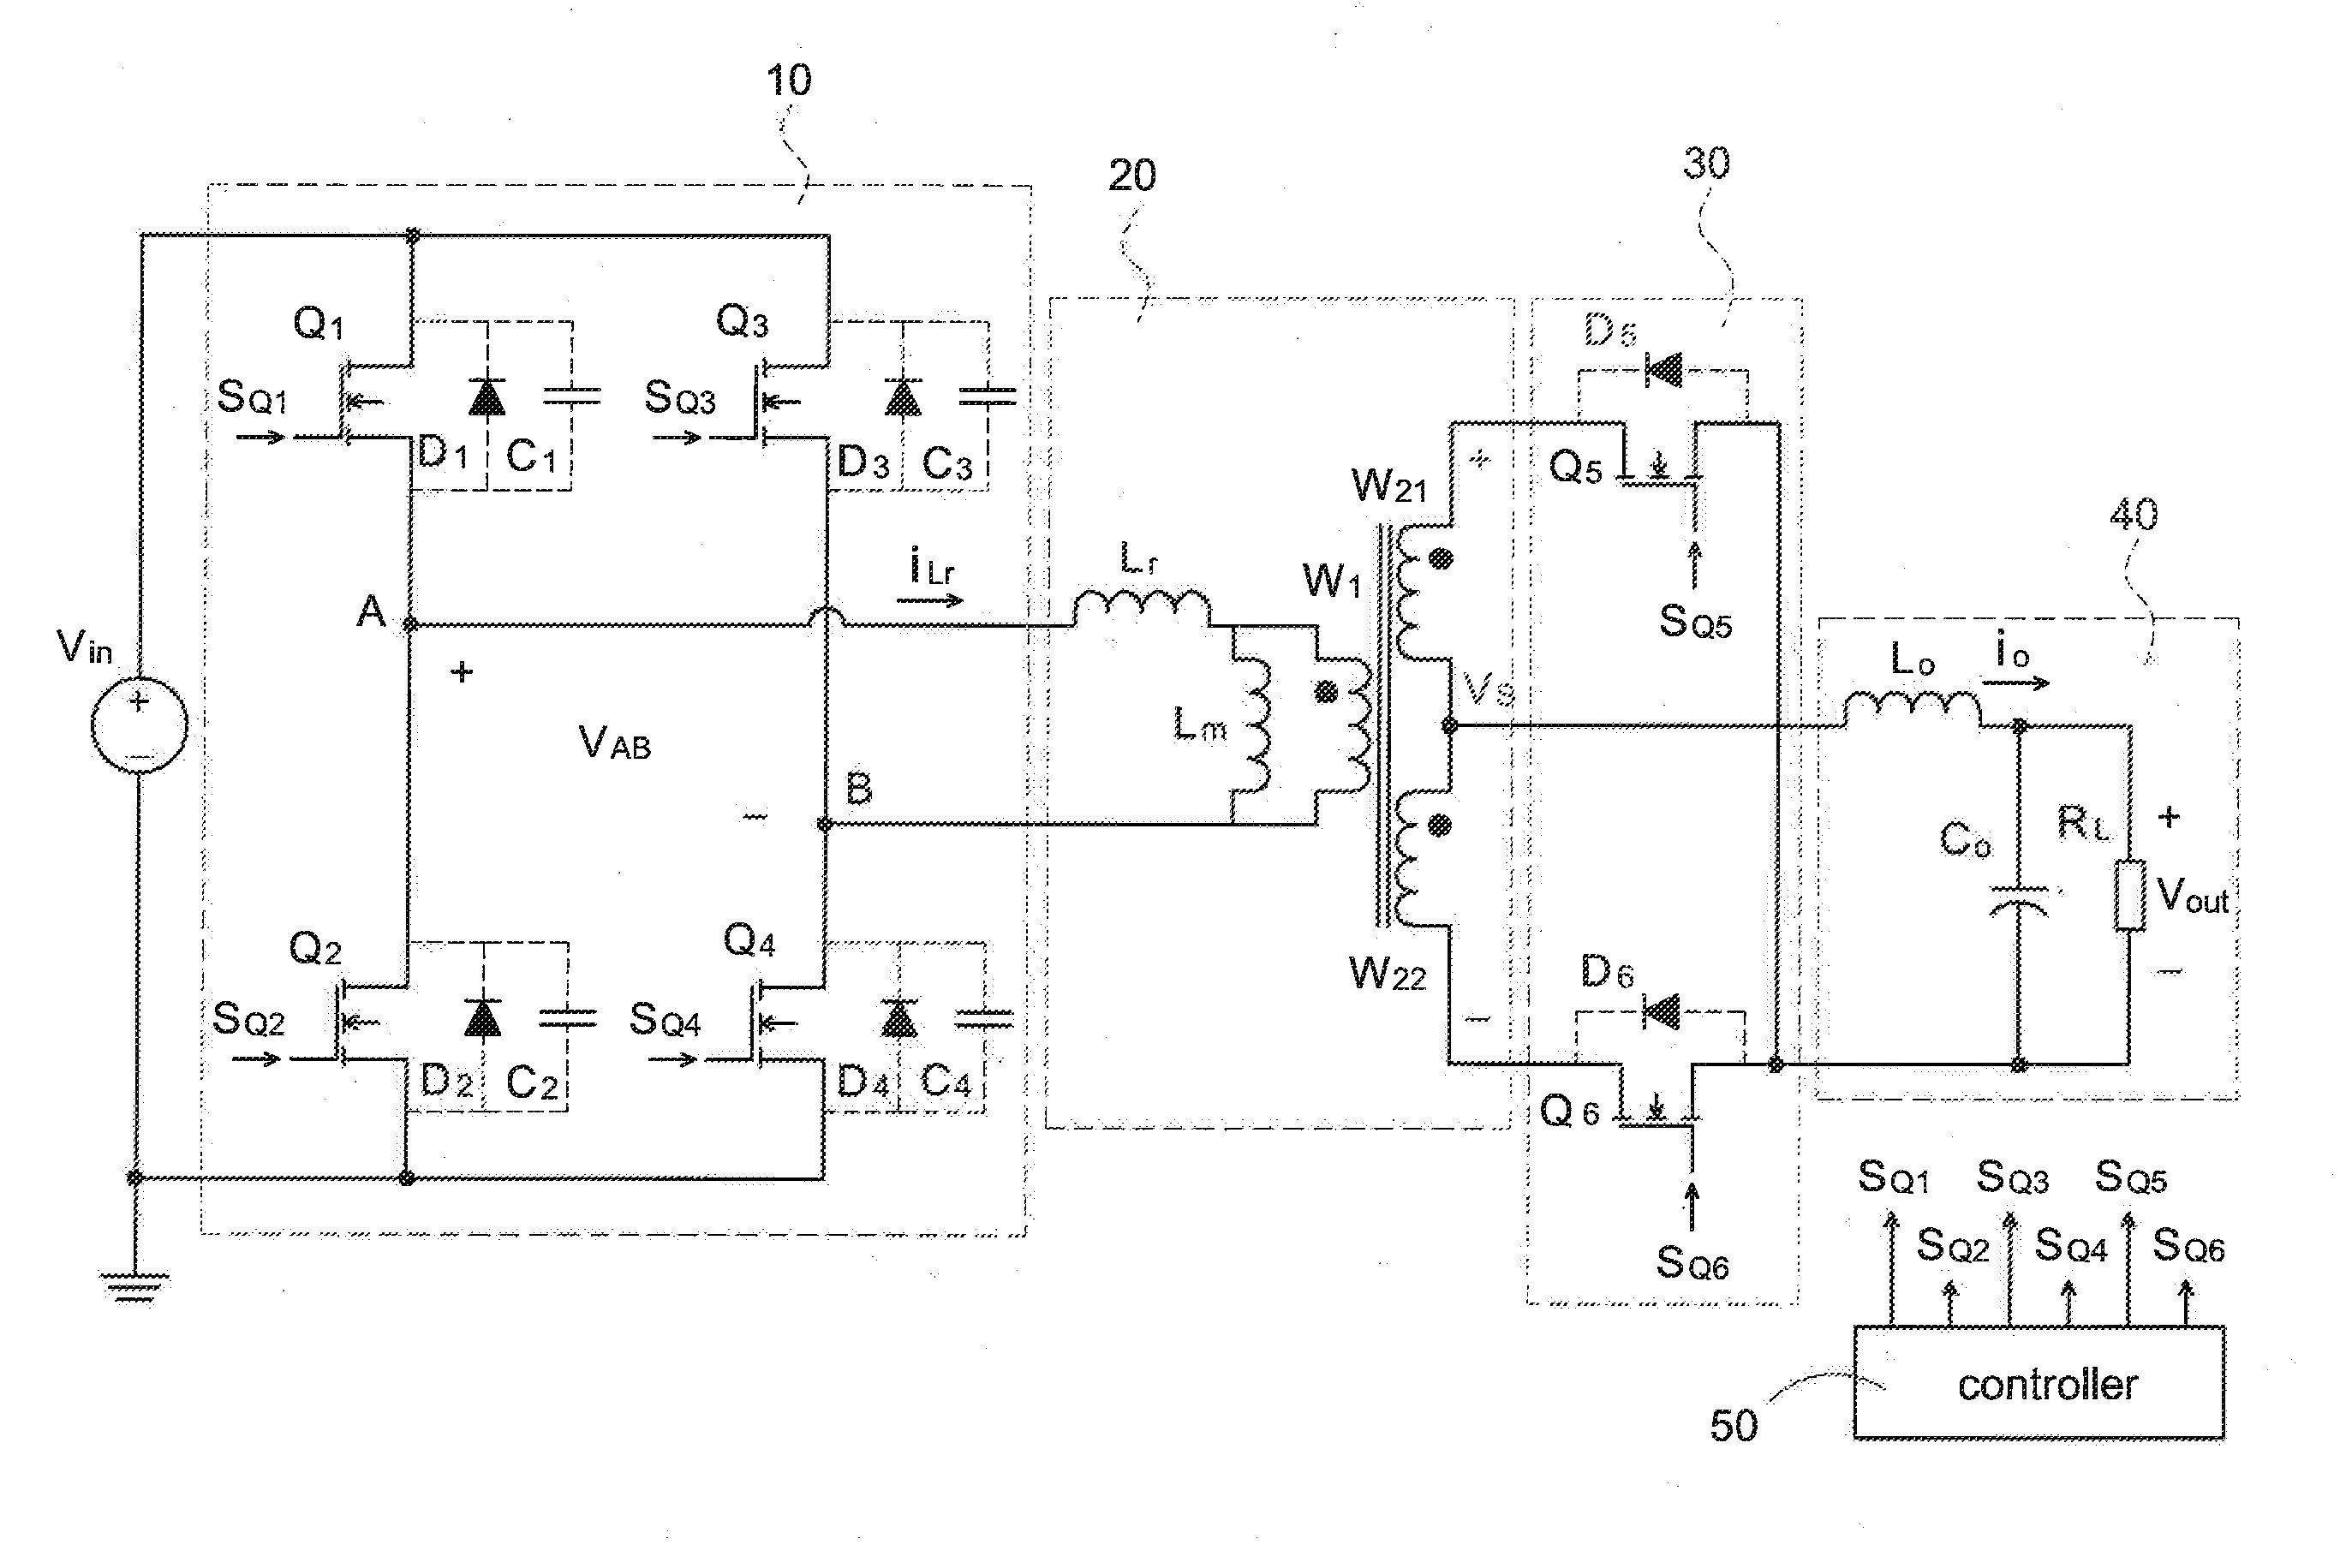 Method of controlling phase-shift full-bridge converter in light load operation